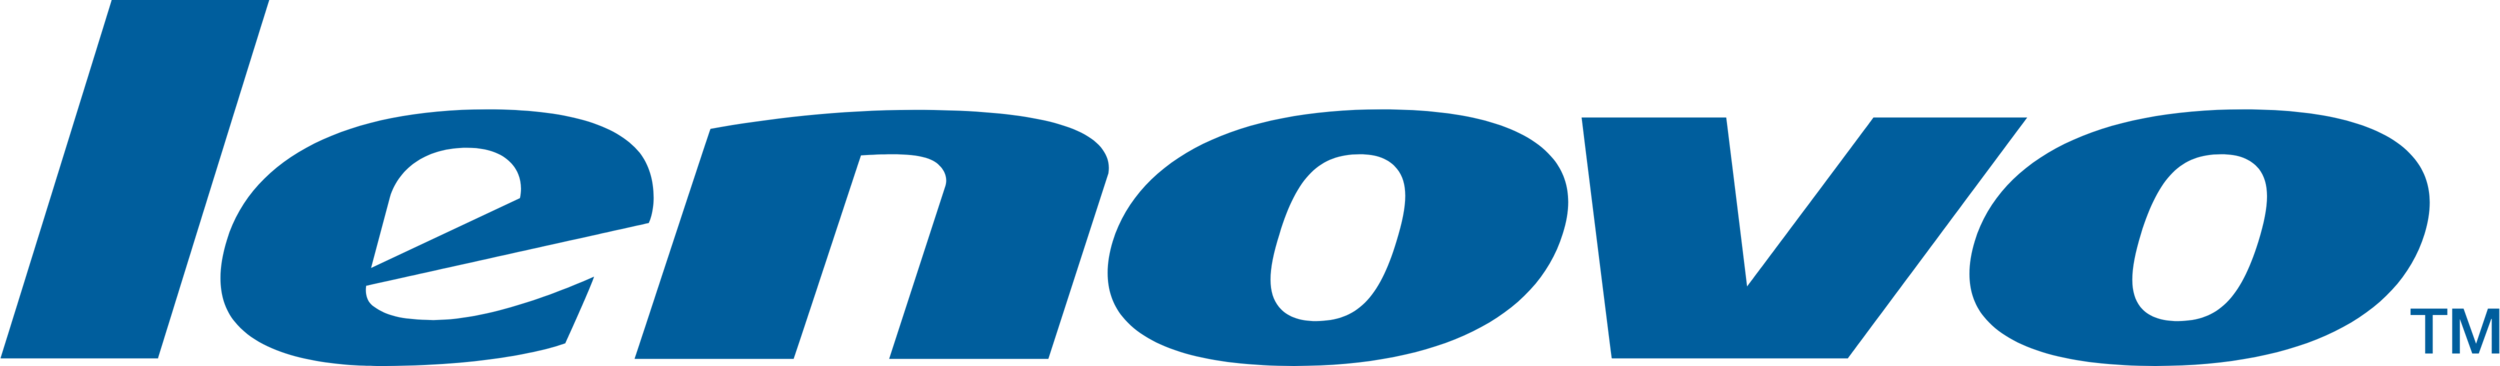 Lenovo_logo_tm.png